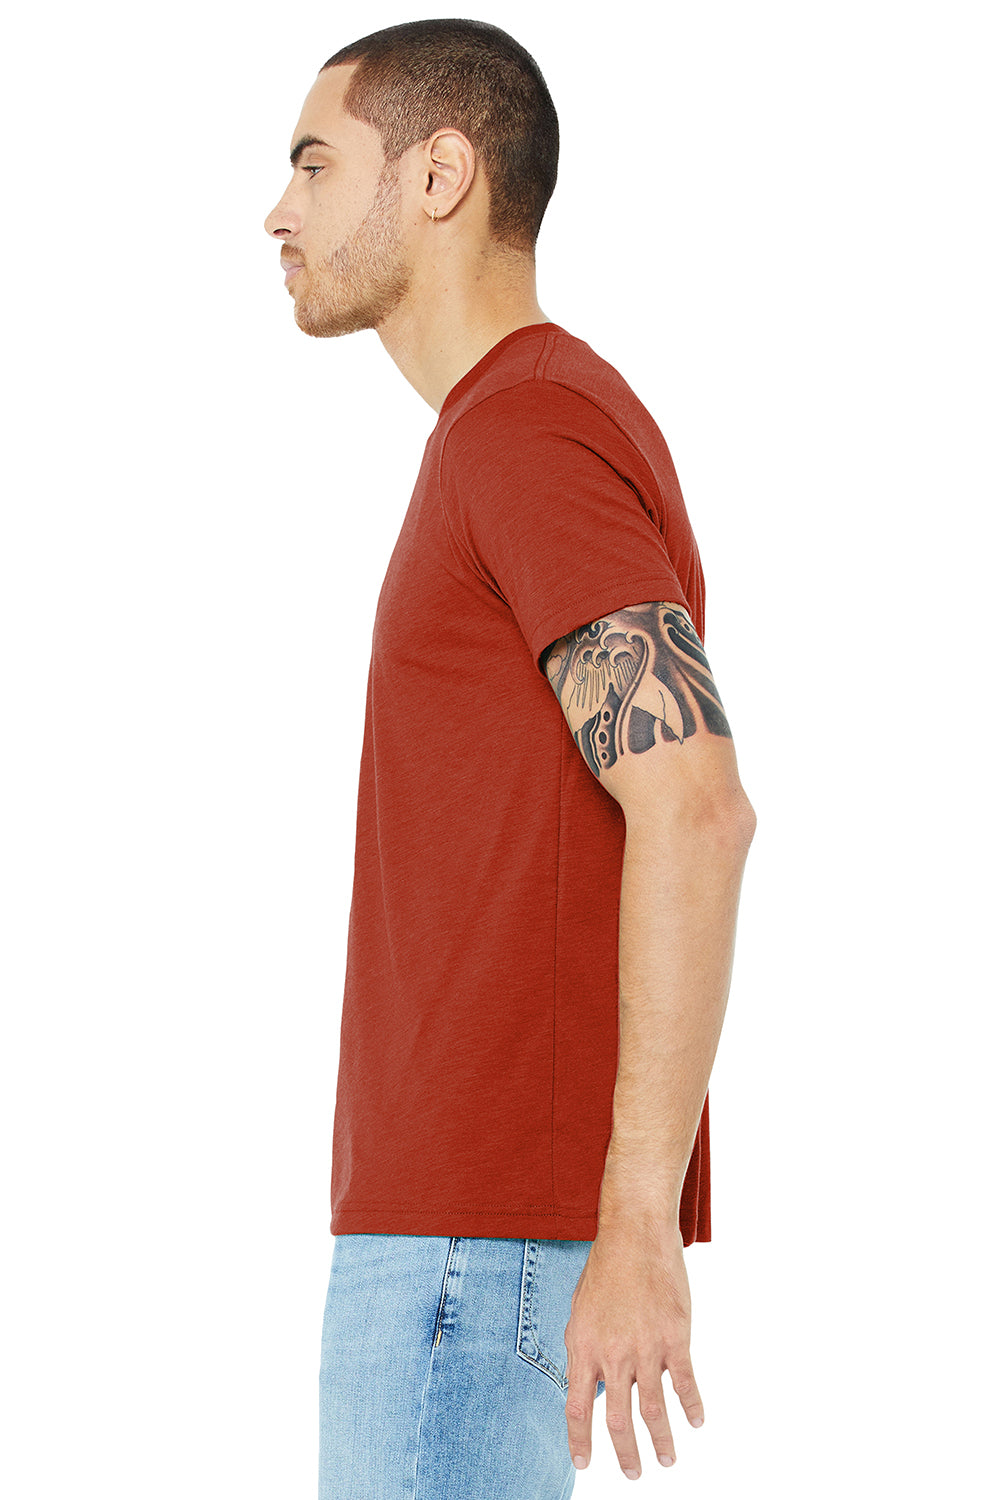 Bella + Canvas BC3413/3413C/3413 Mens Short Sleeve Crewneck T-Shirt Brick Red Model Side